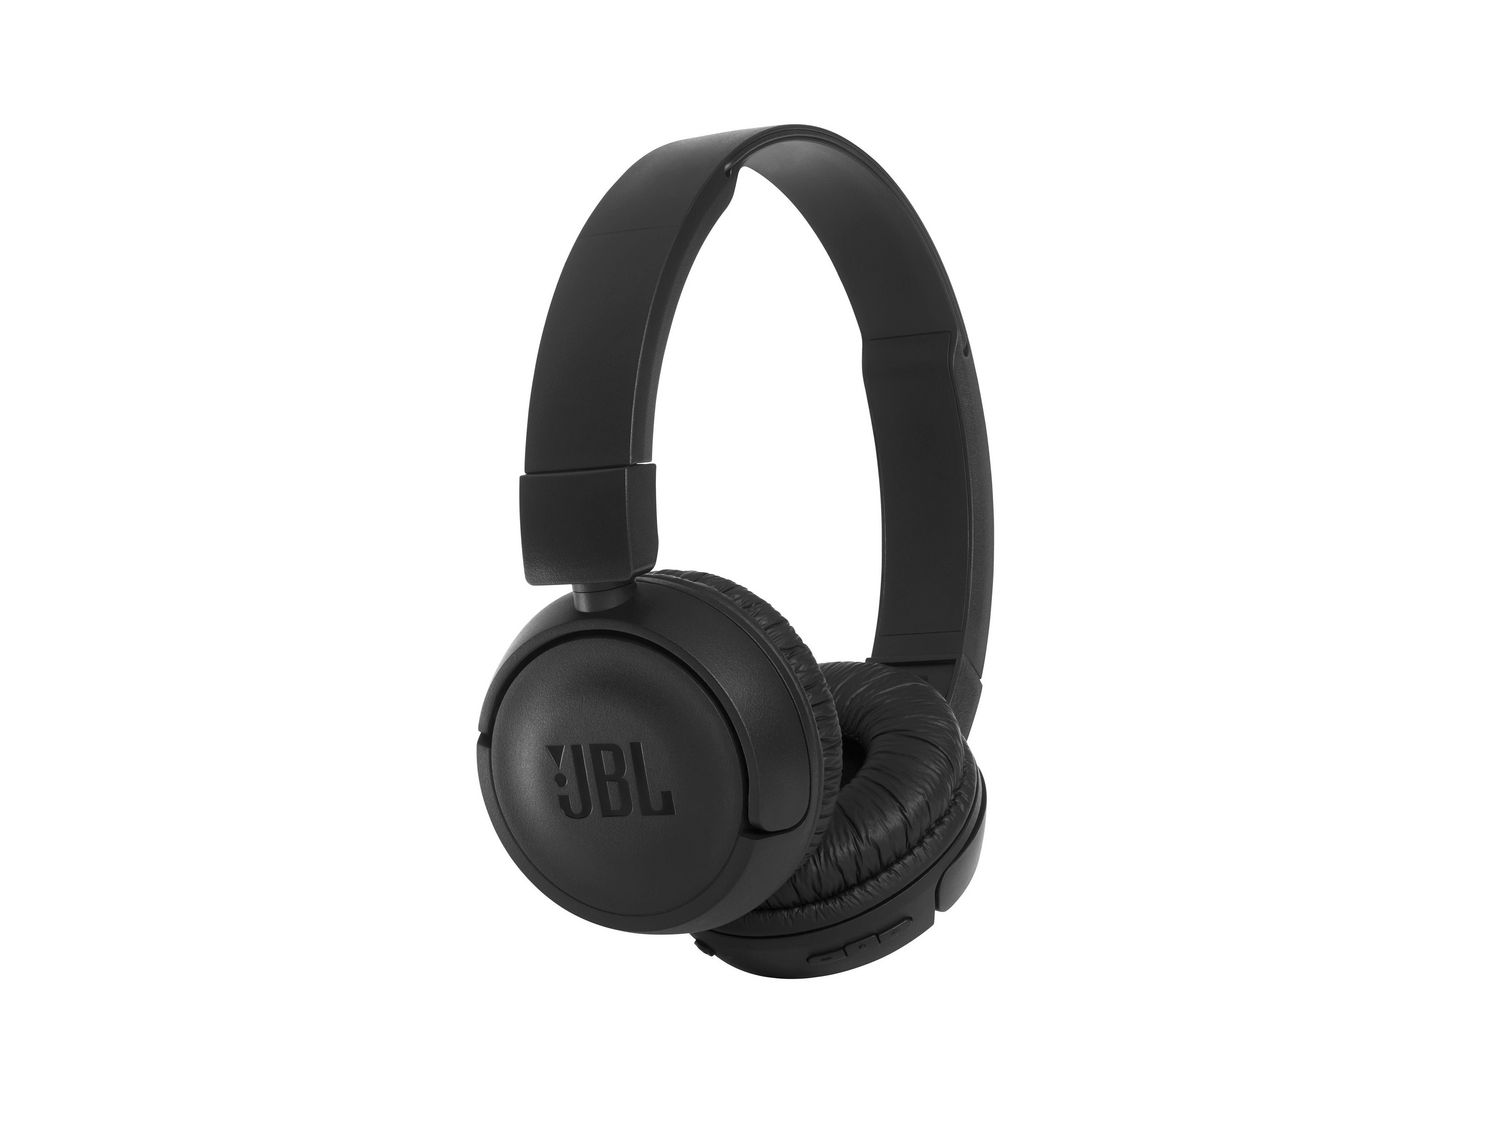 Flourish kravle Mathis JBL T450BT Bluetooth Wireless Headphones Black | Walmart Canada